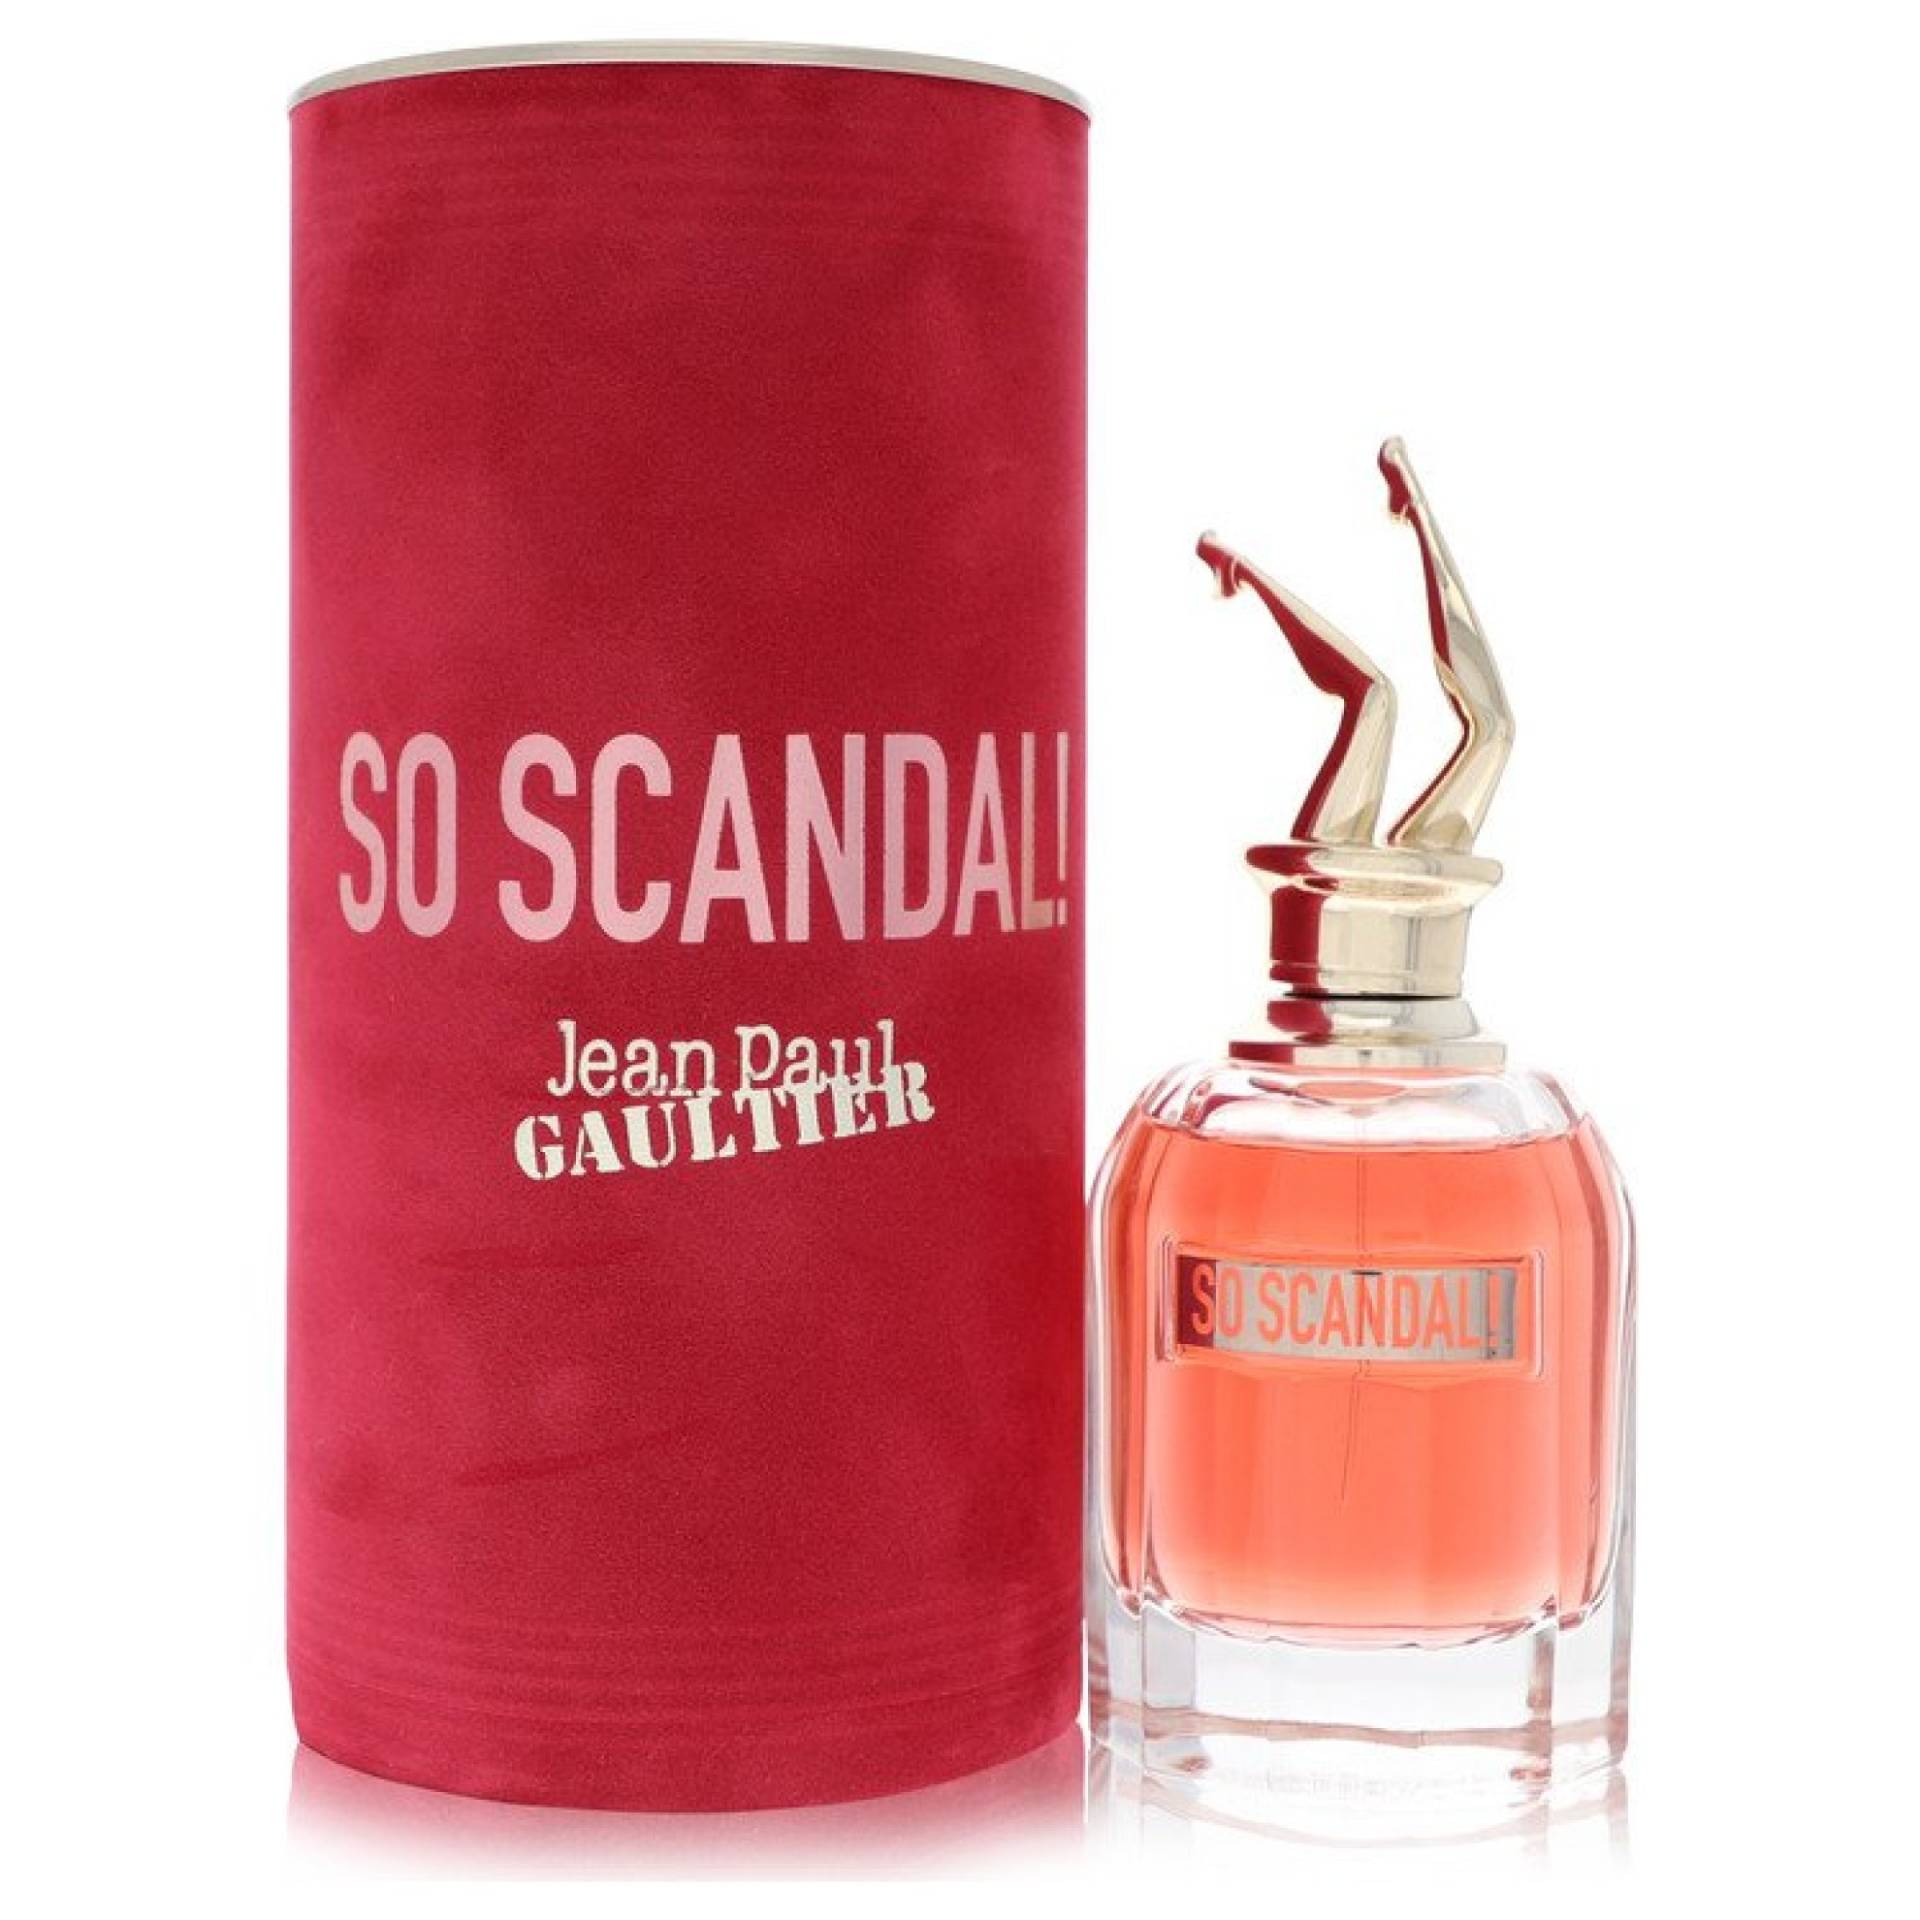 Jean Paul Gaultier So Scandal! Eau De Parfum Spray 80 ml von Jean Paul Gaultier